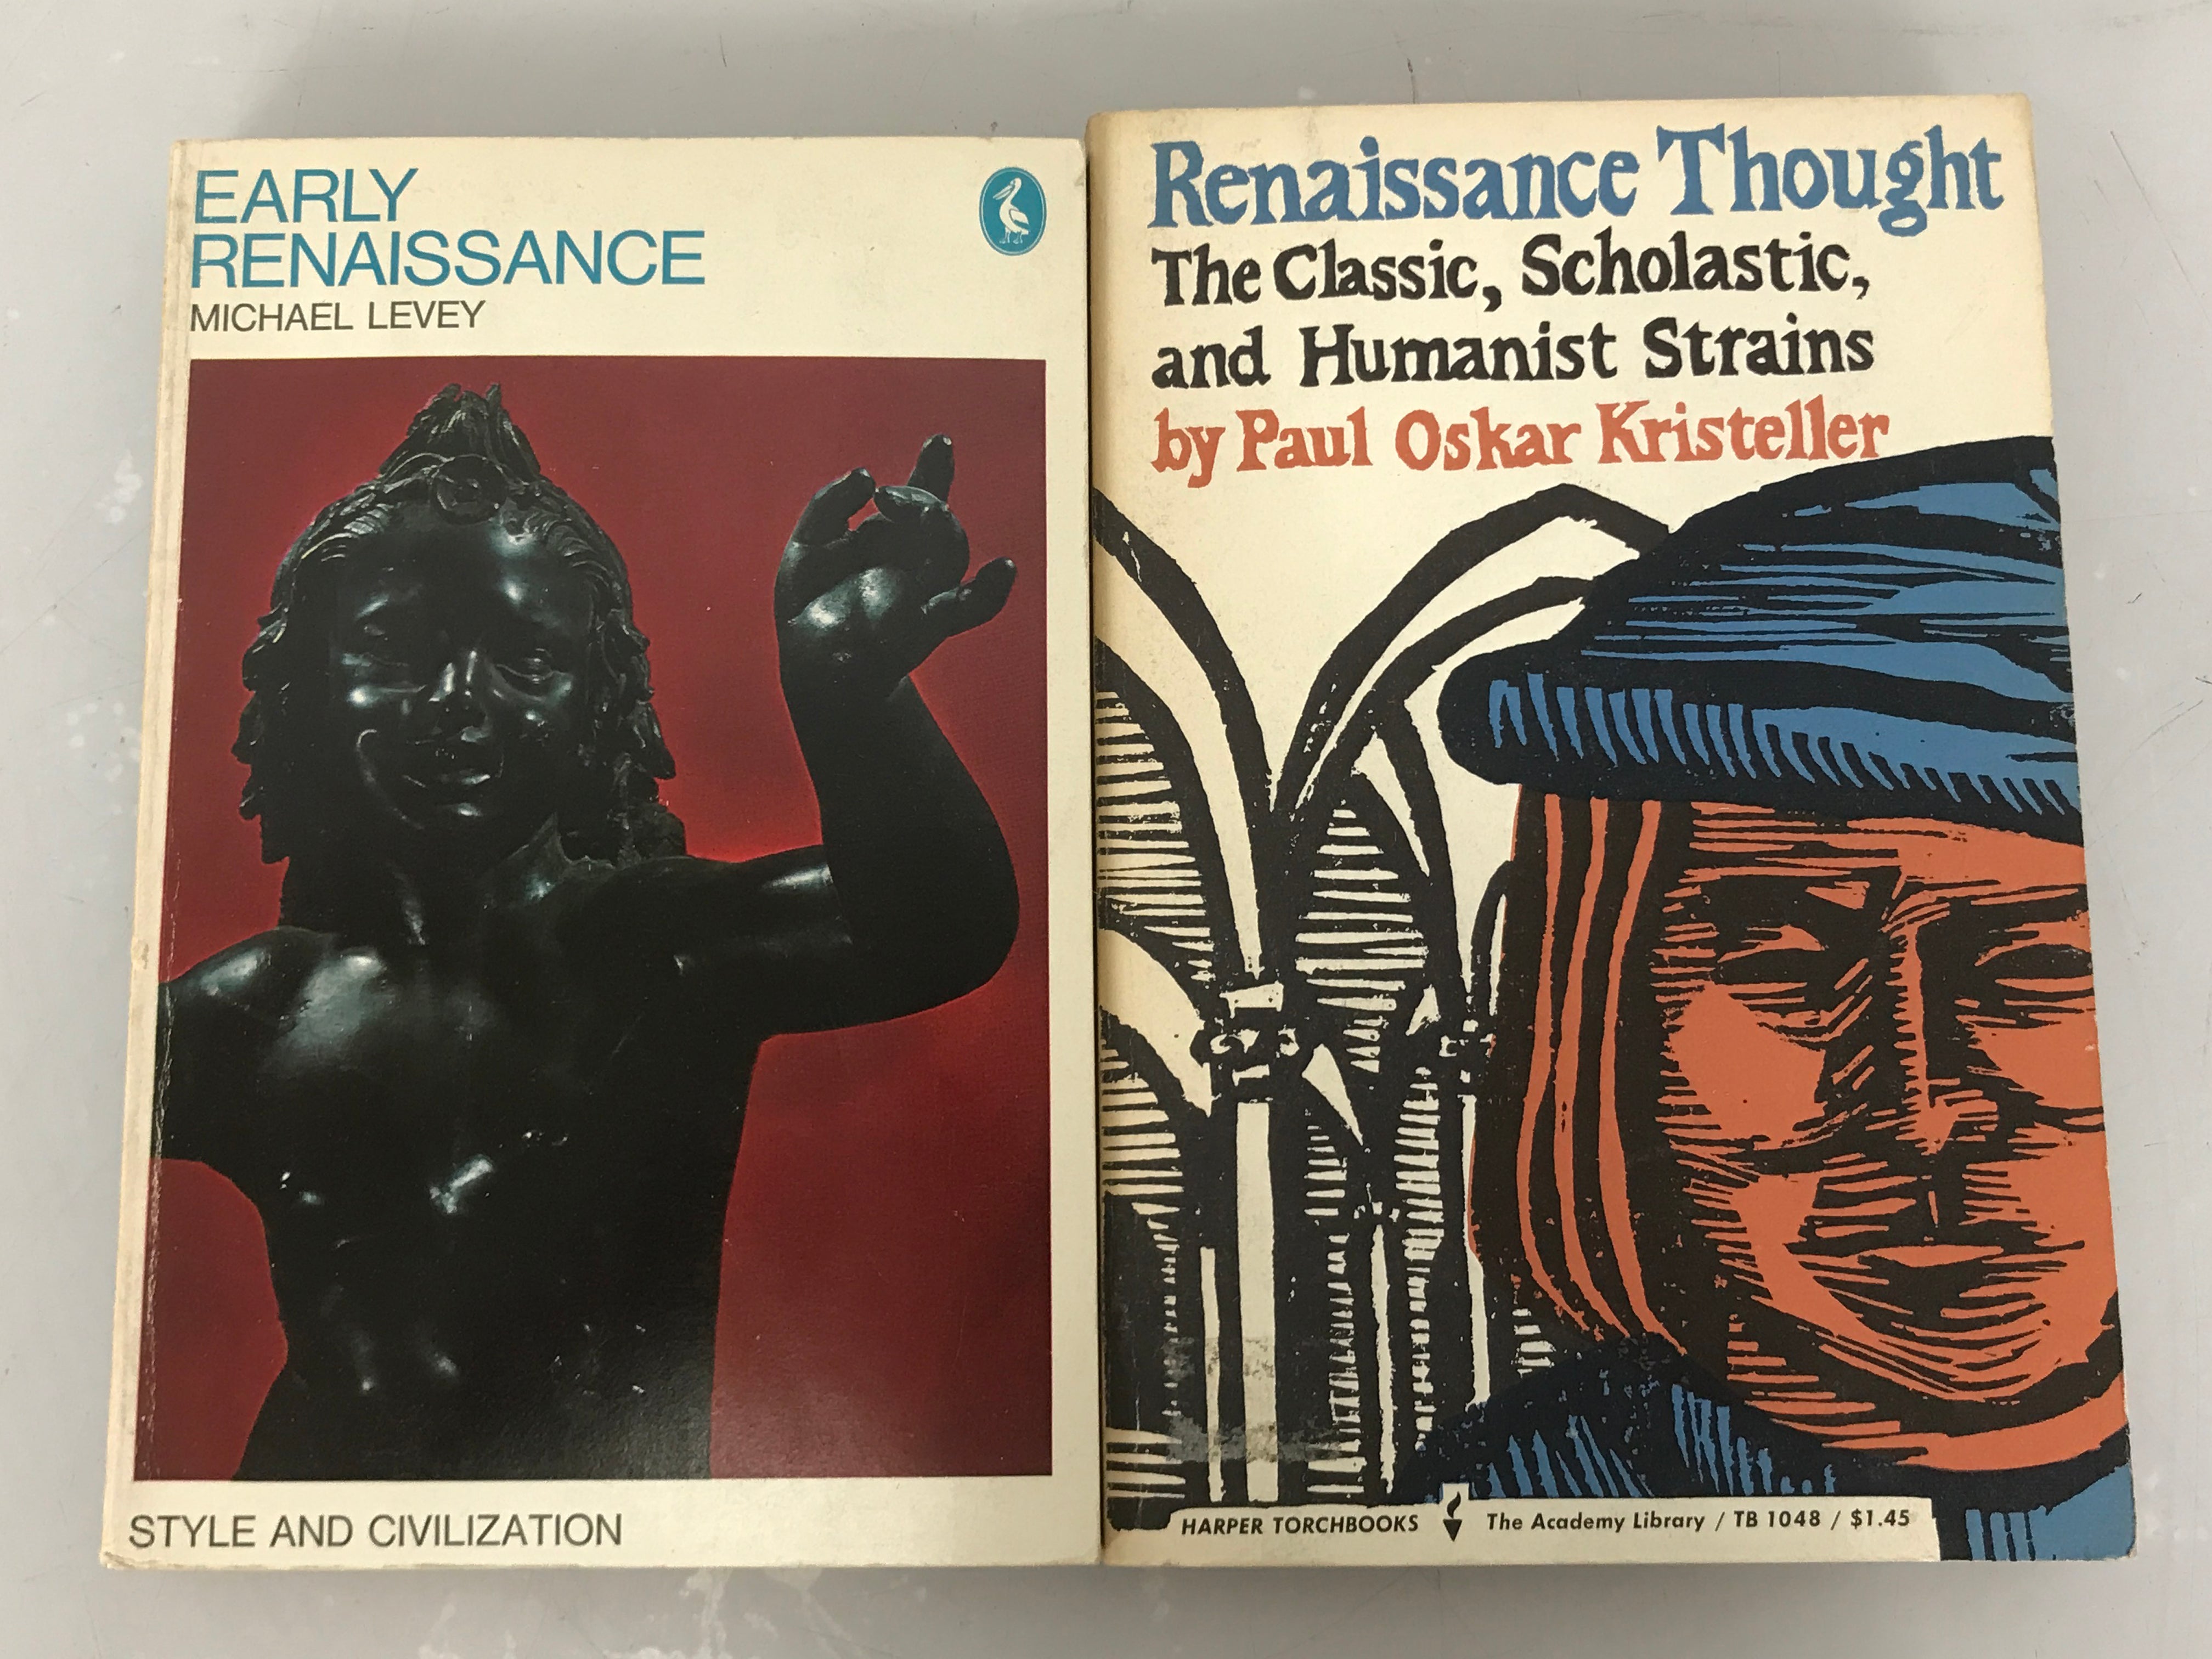 Early Renaissance by Michael Levey/Renaissance Thought by Paul Oskar Kristeller